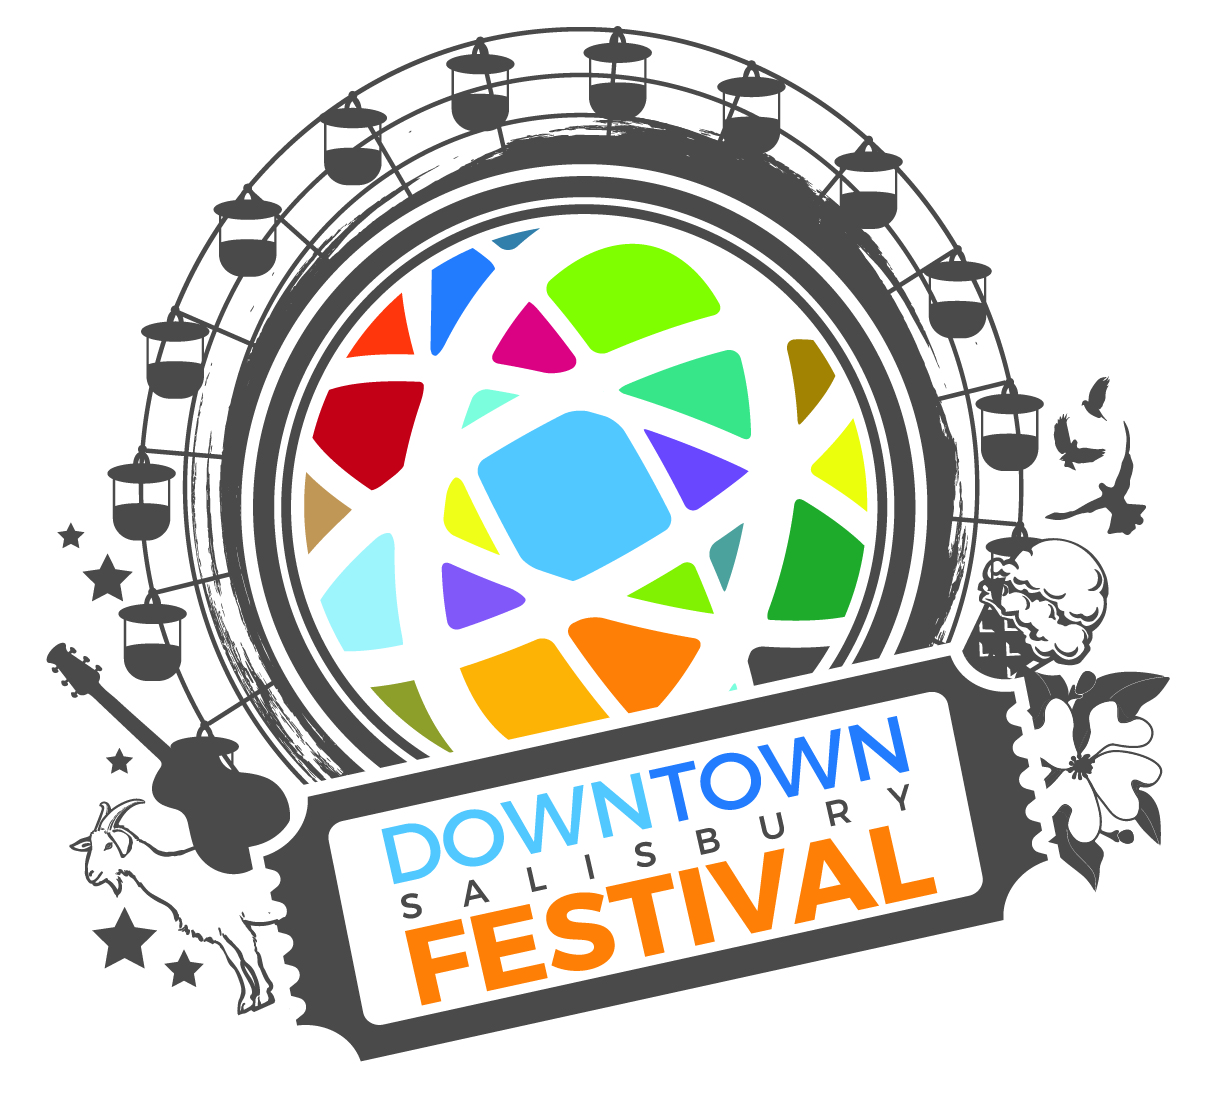 The Downtown Salisbury Festival Returns This June SBJ